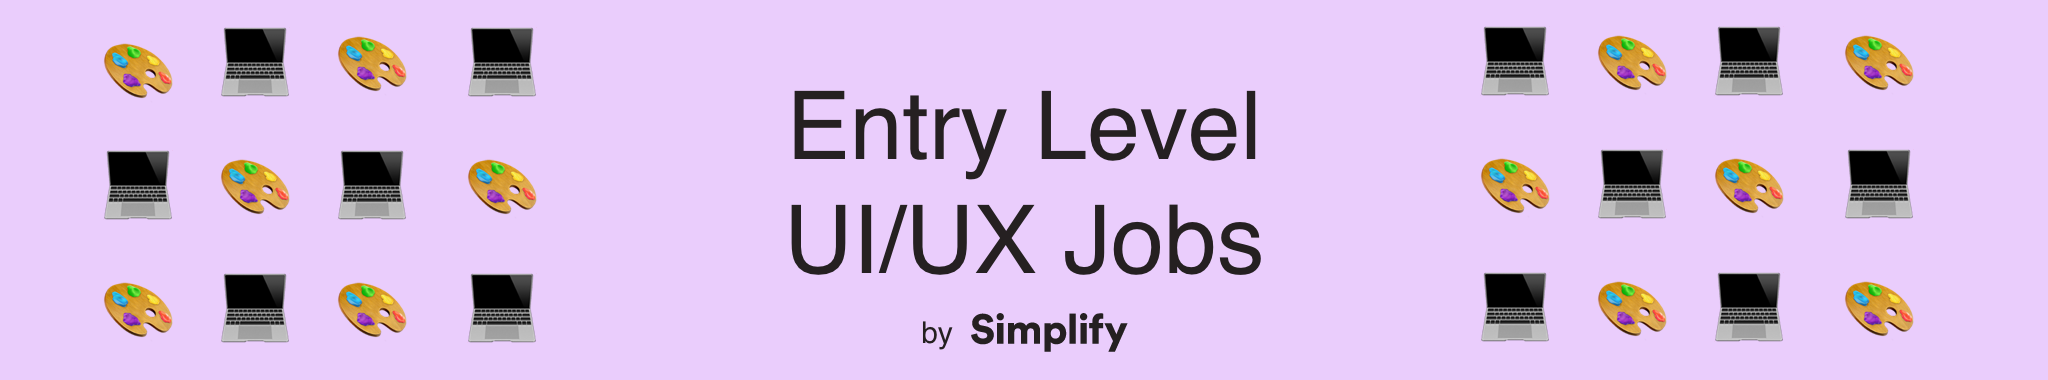 Entry Level UI/UX Design Jobs